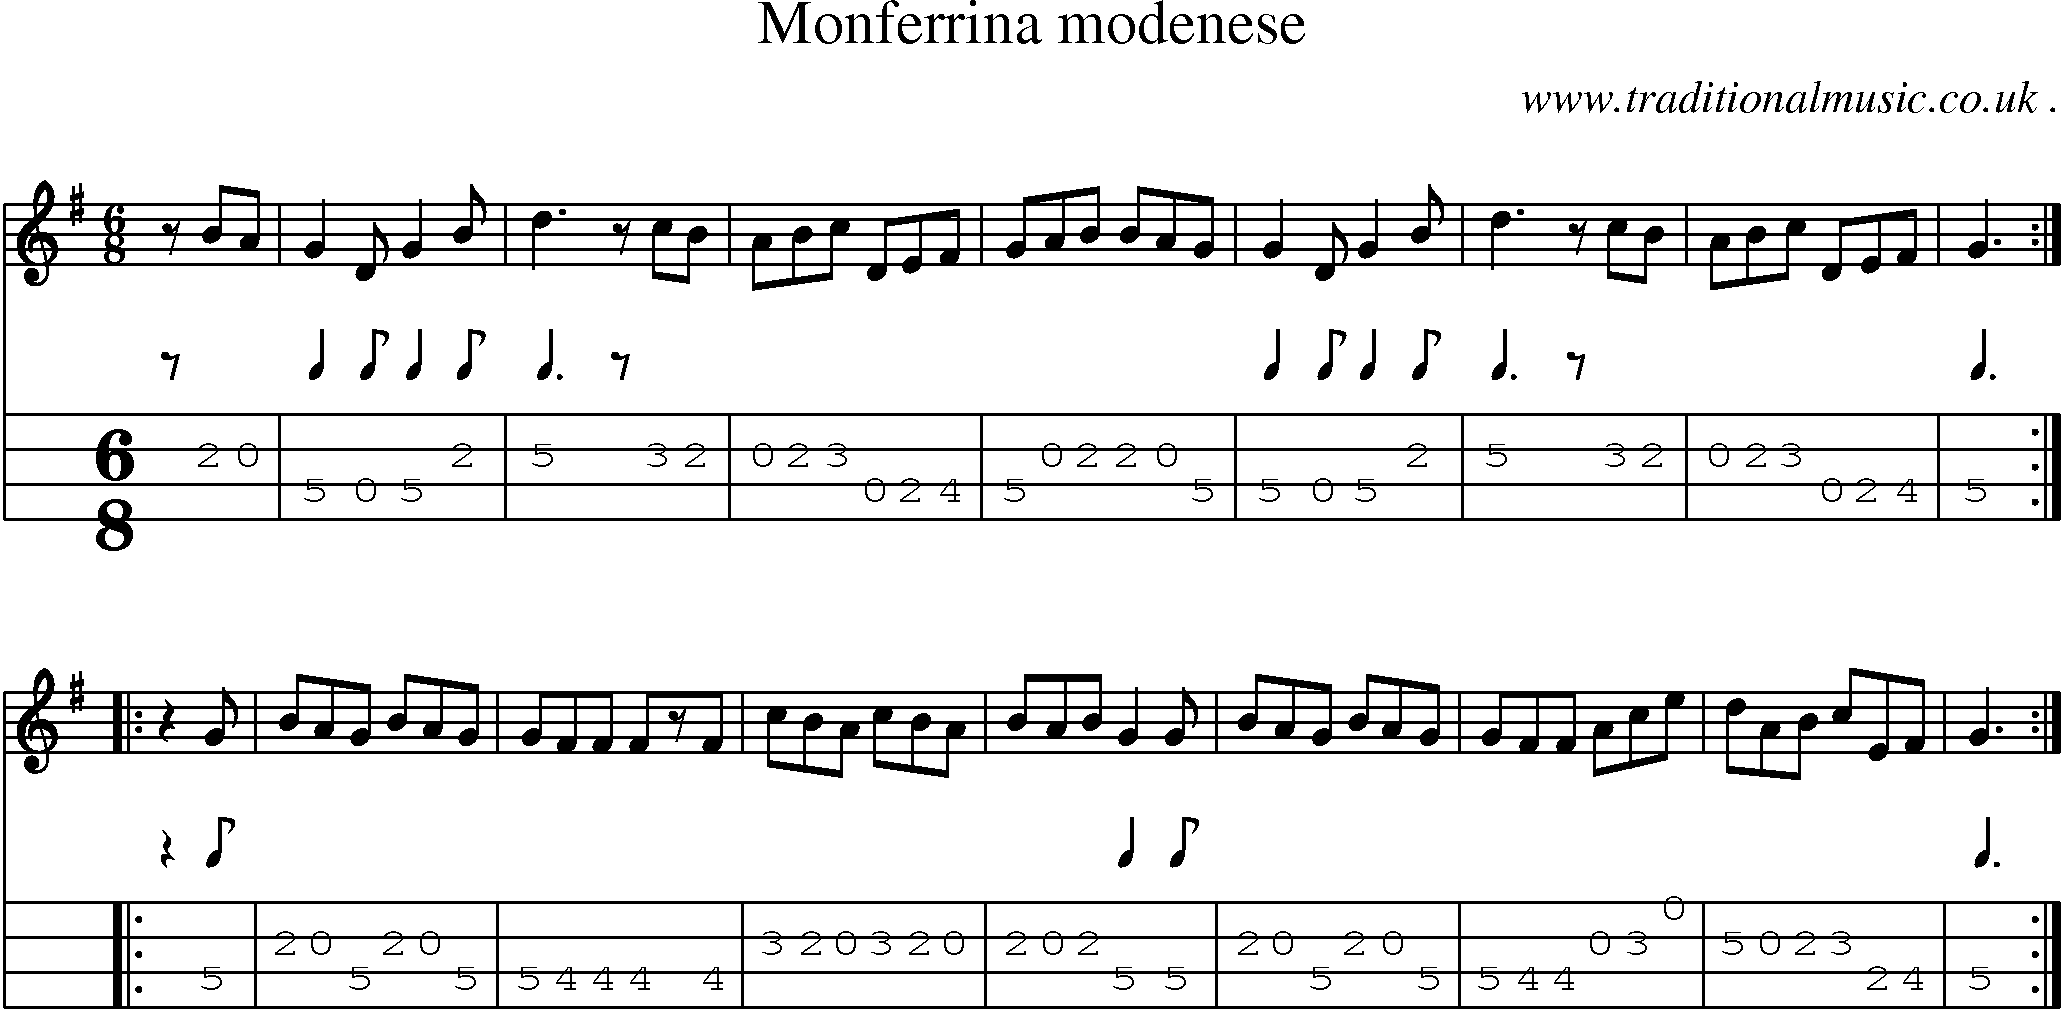 Sheet-Music and Mandolin Tabs for Monferrina Modenese